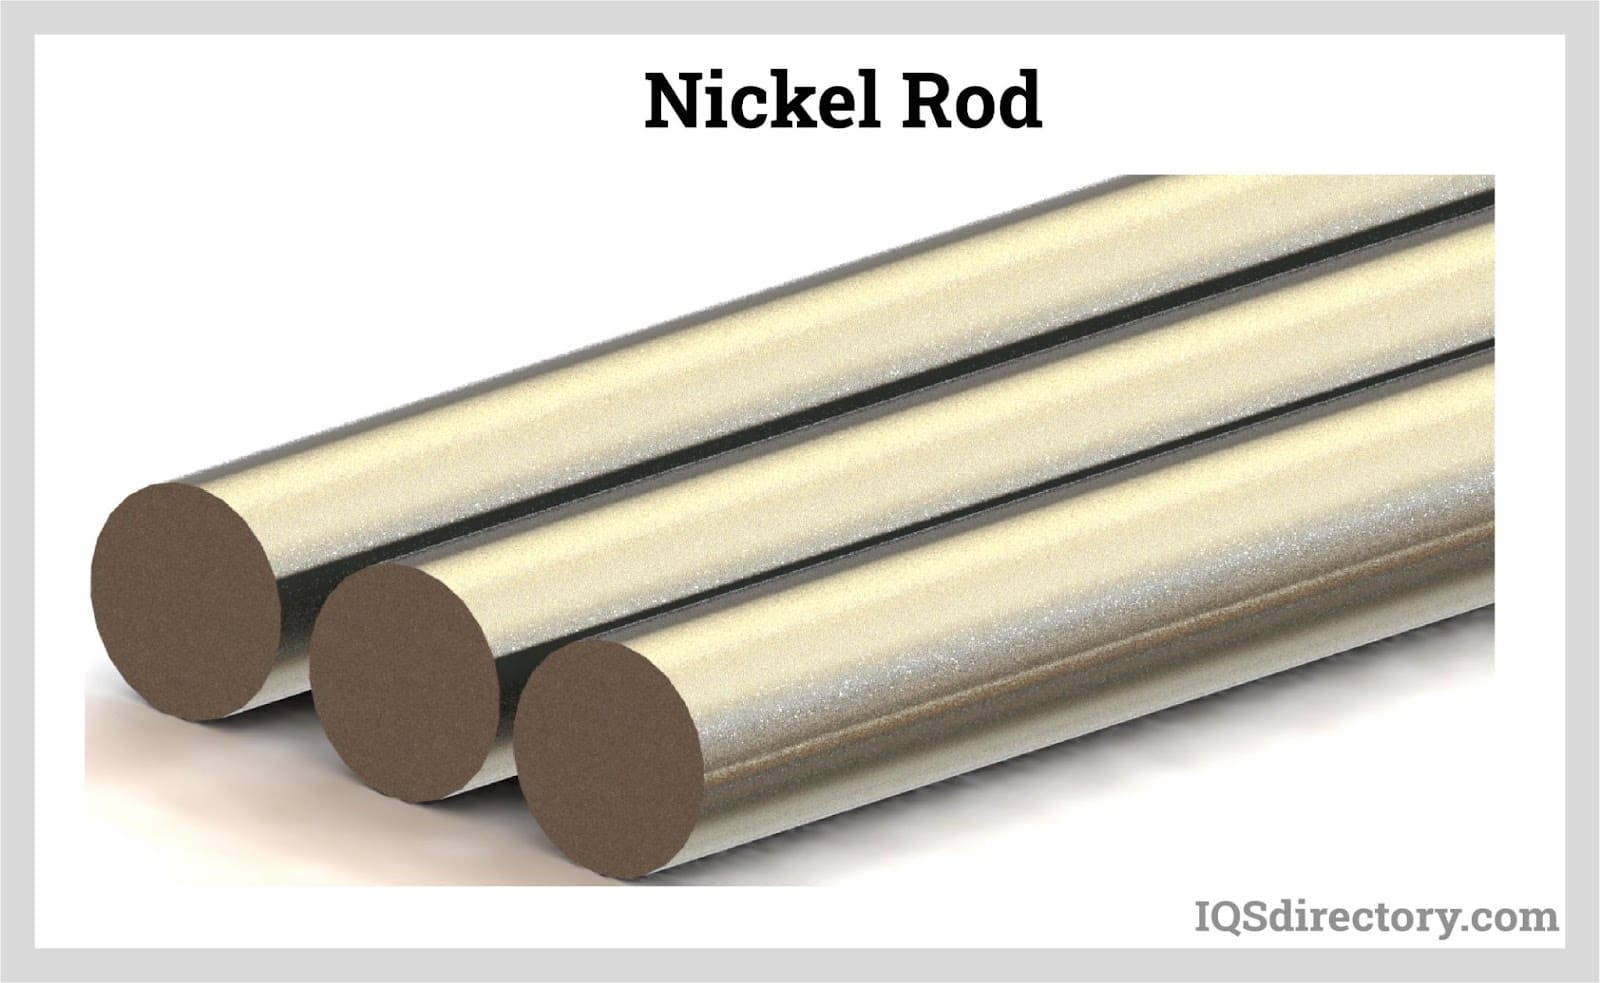 Nickel Rod